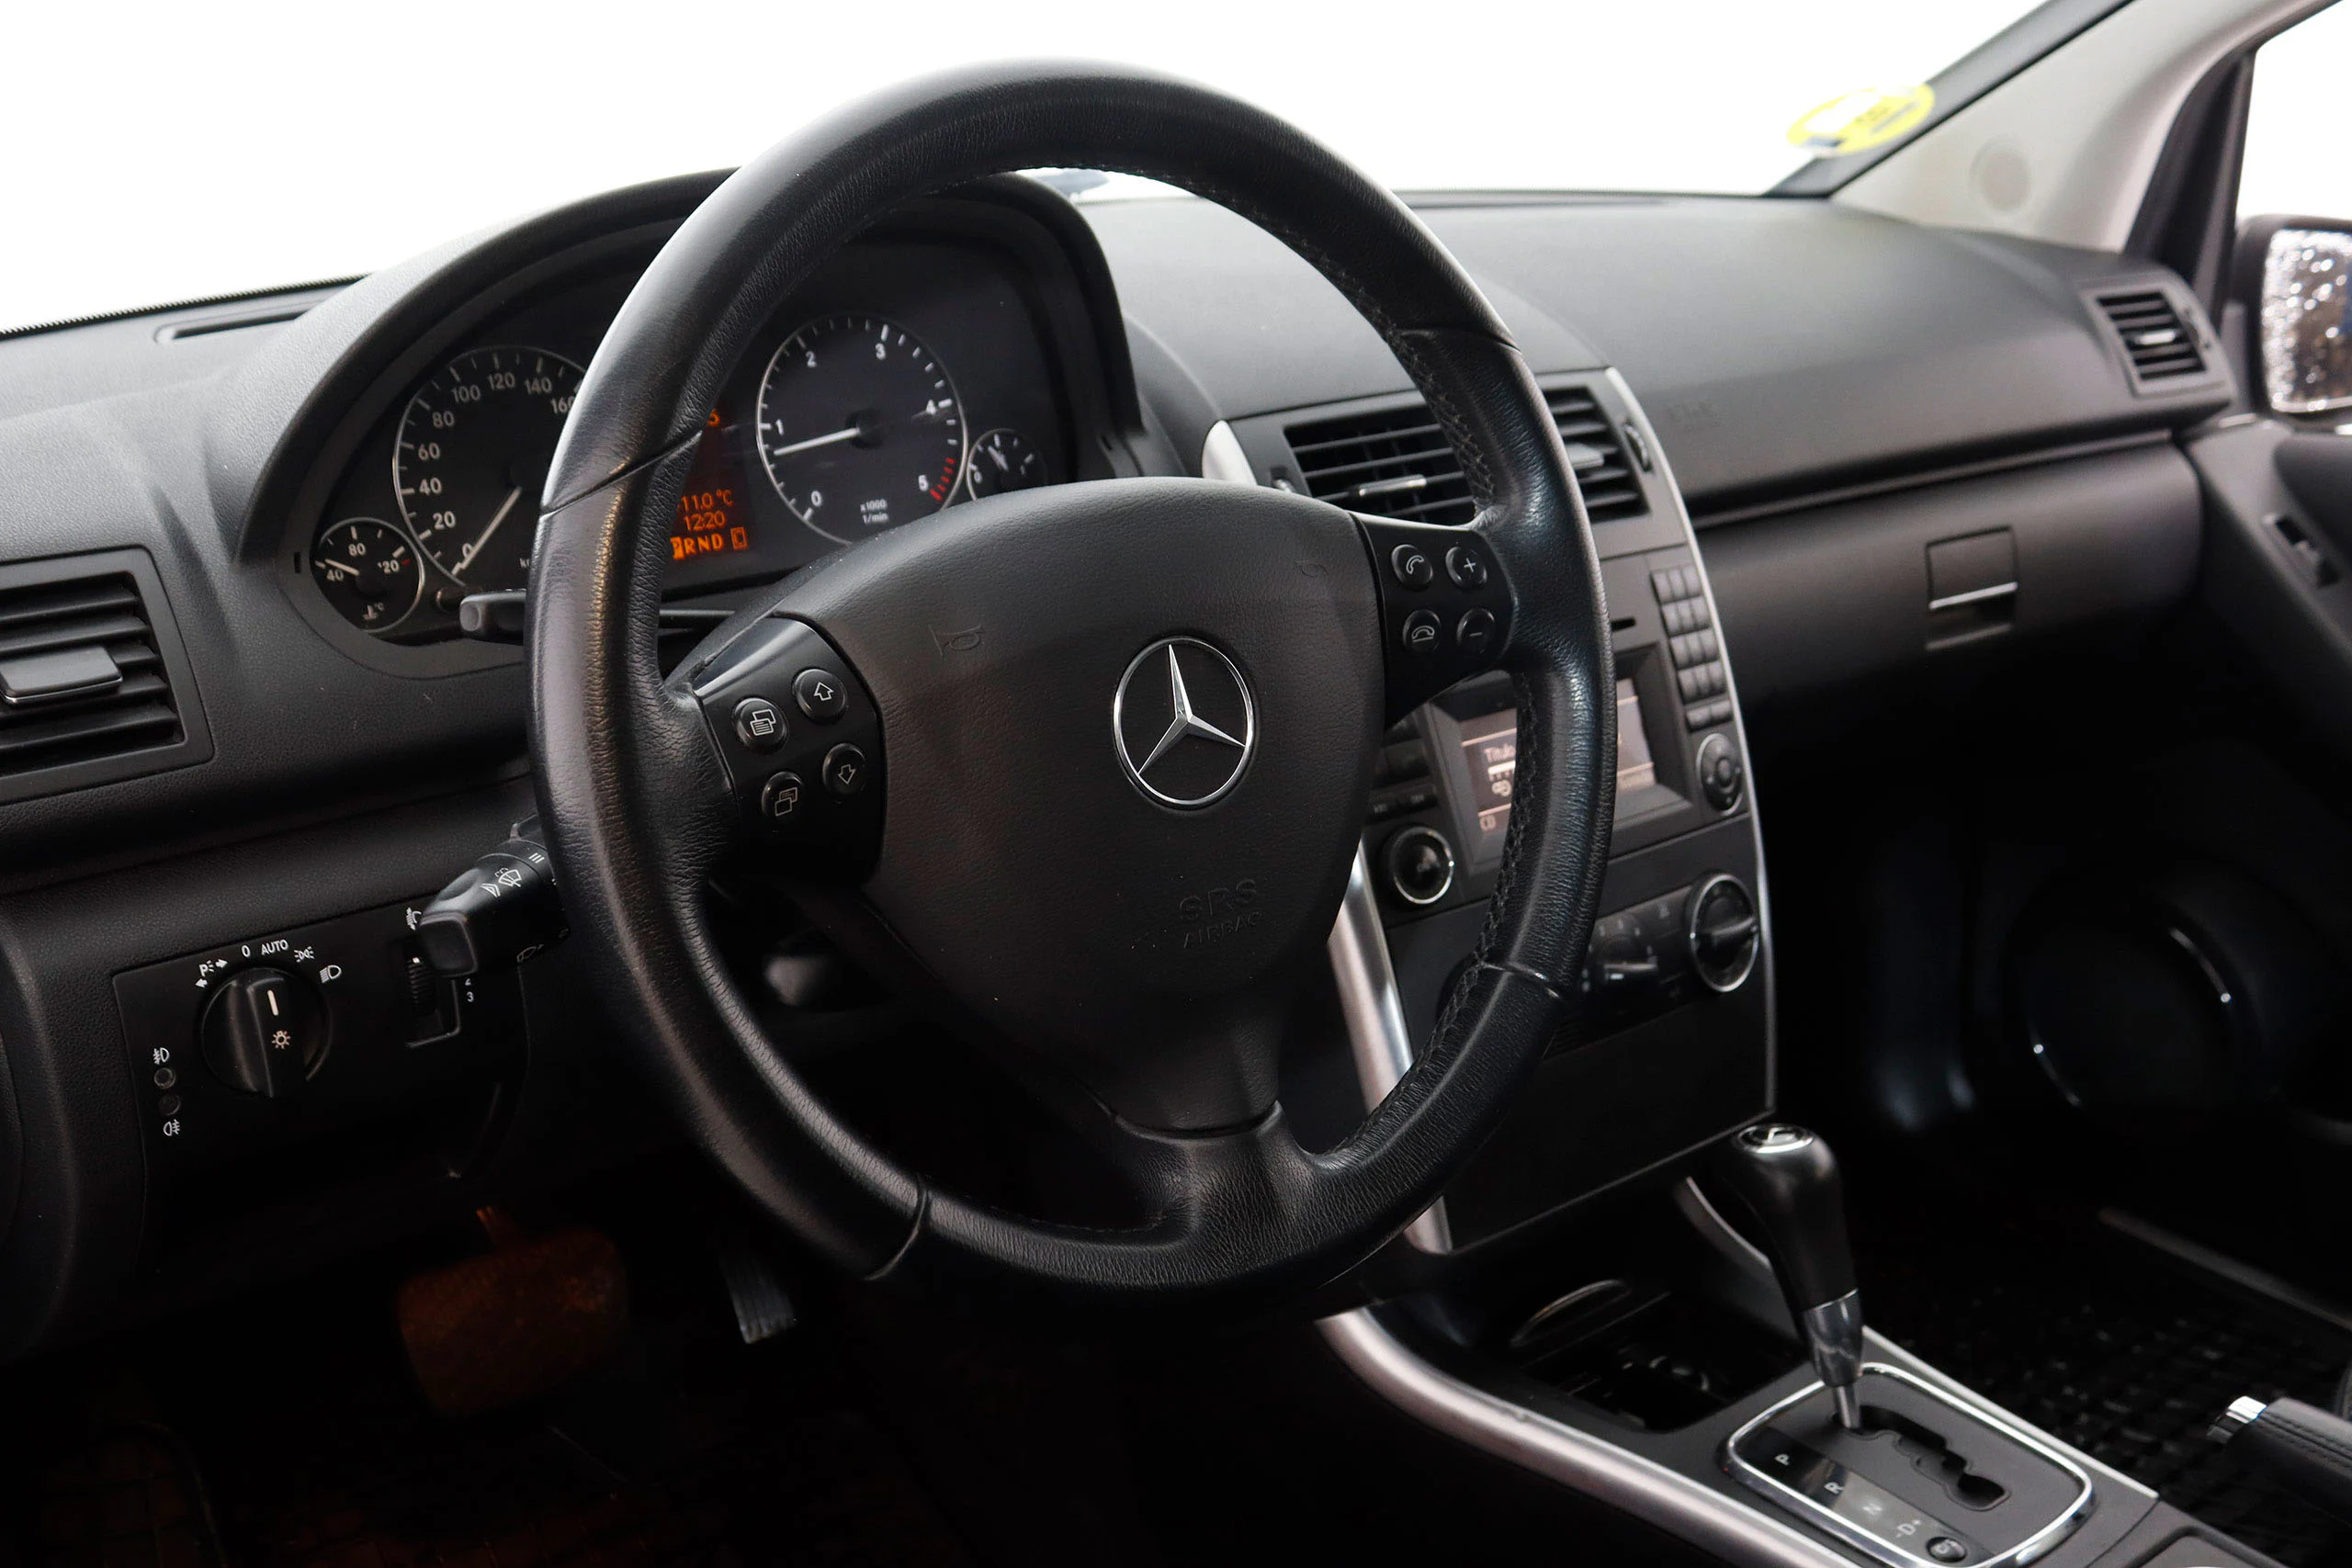 Mercedes-benz A 180 CDI 110cv Auto 5P # PARKTRONIC - Foto 14